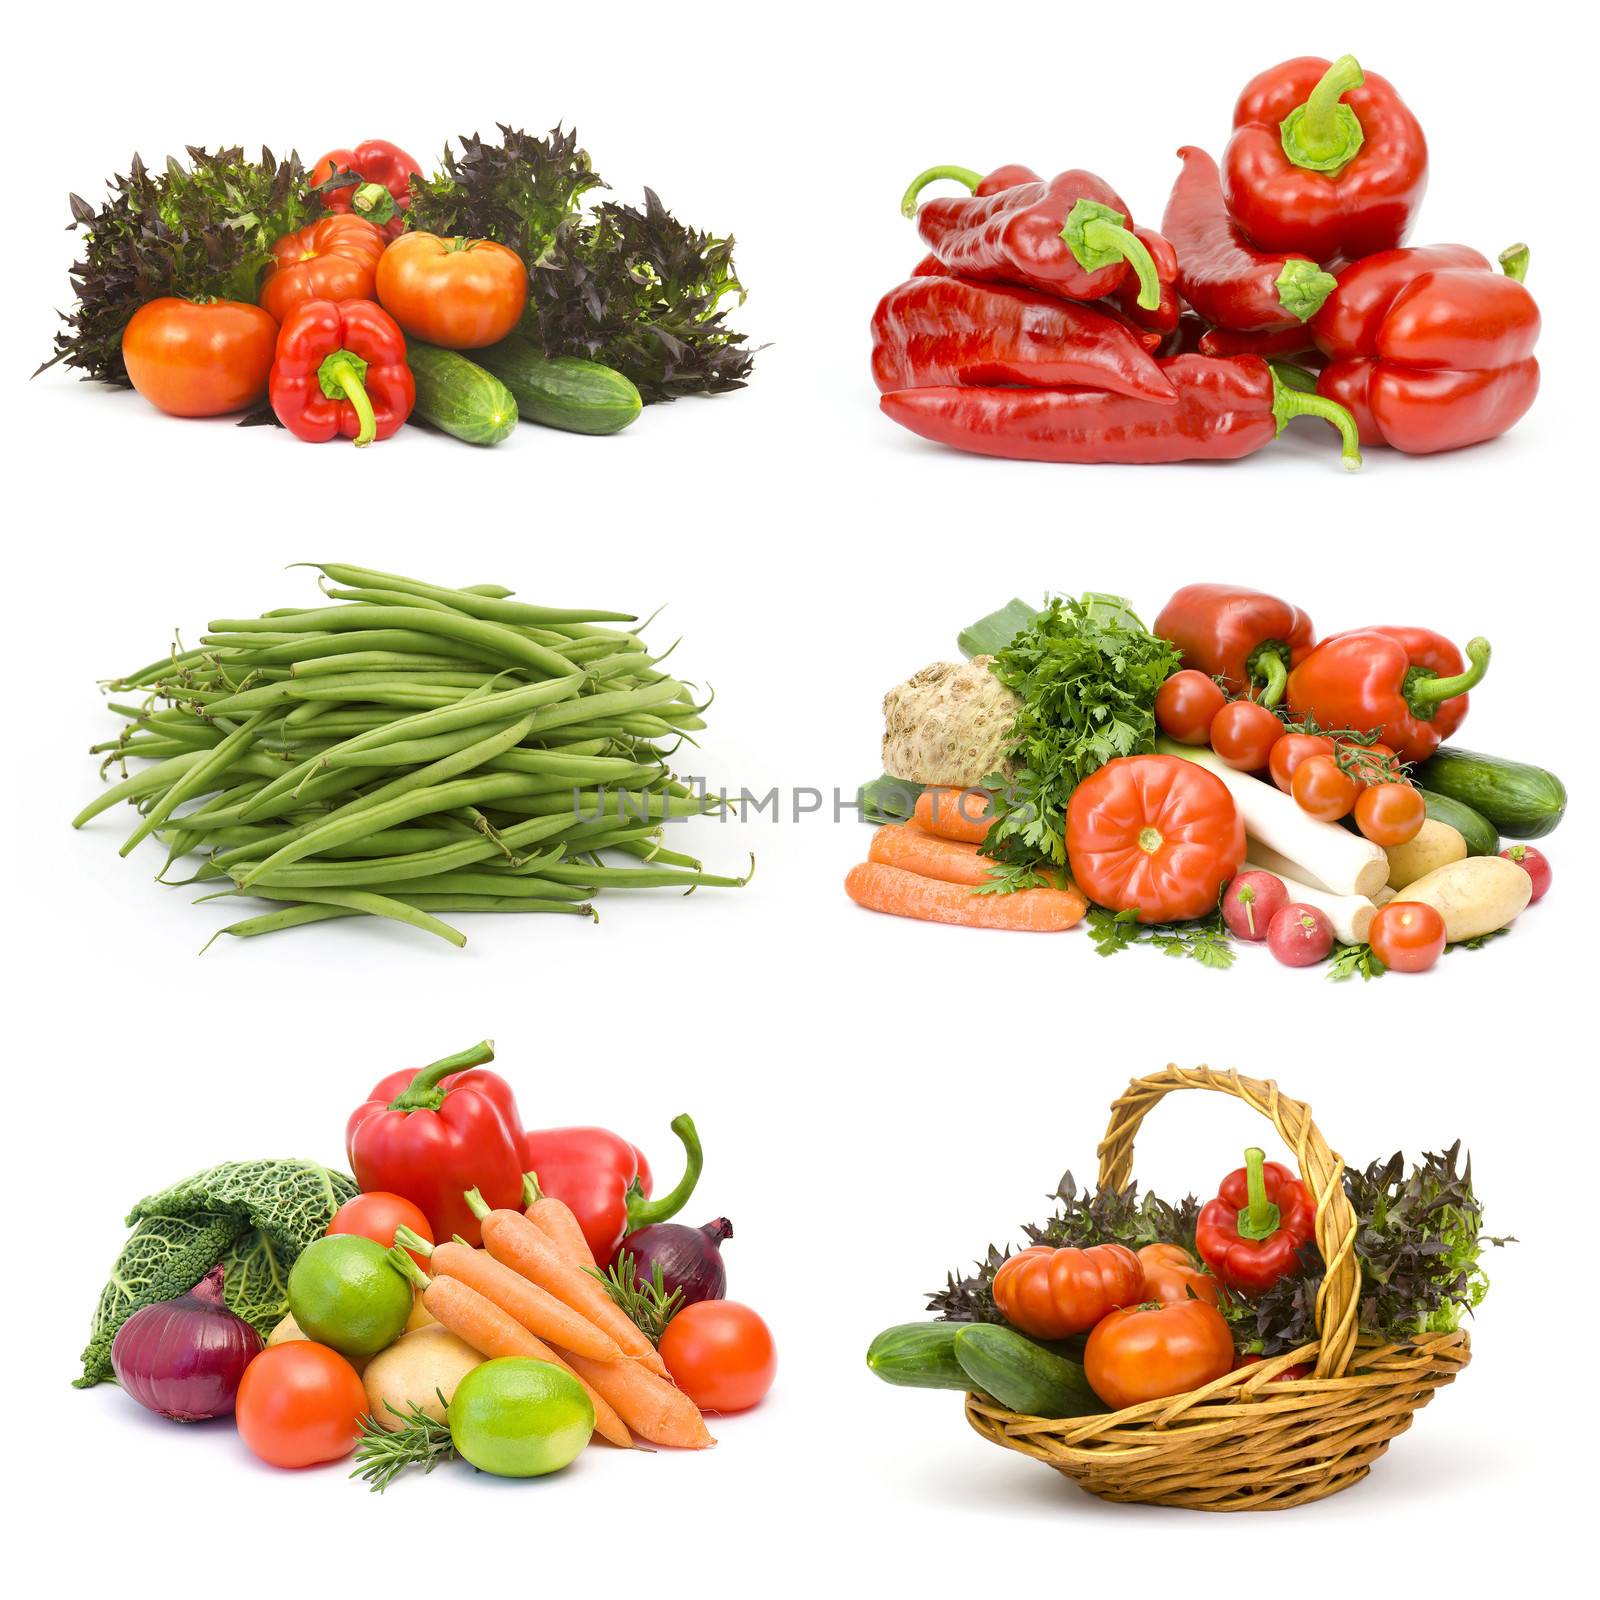 fresh vegetables - collage by miradrozdowski